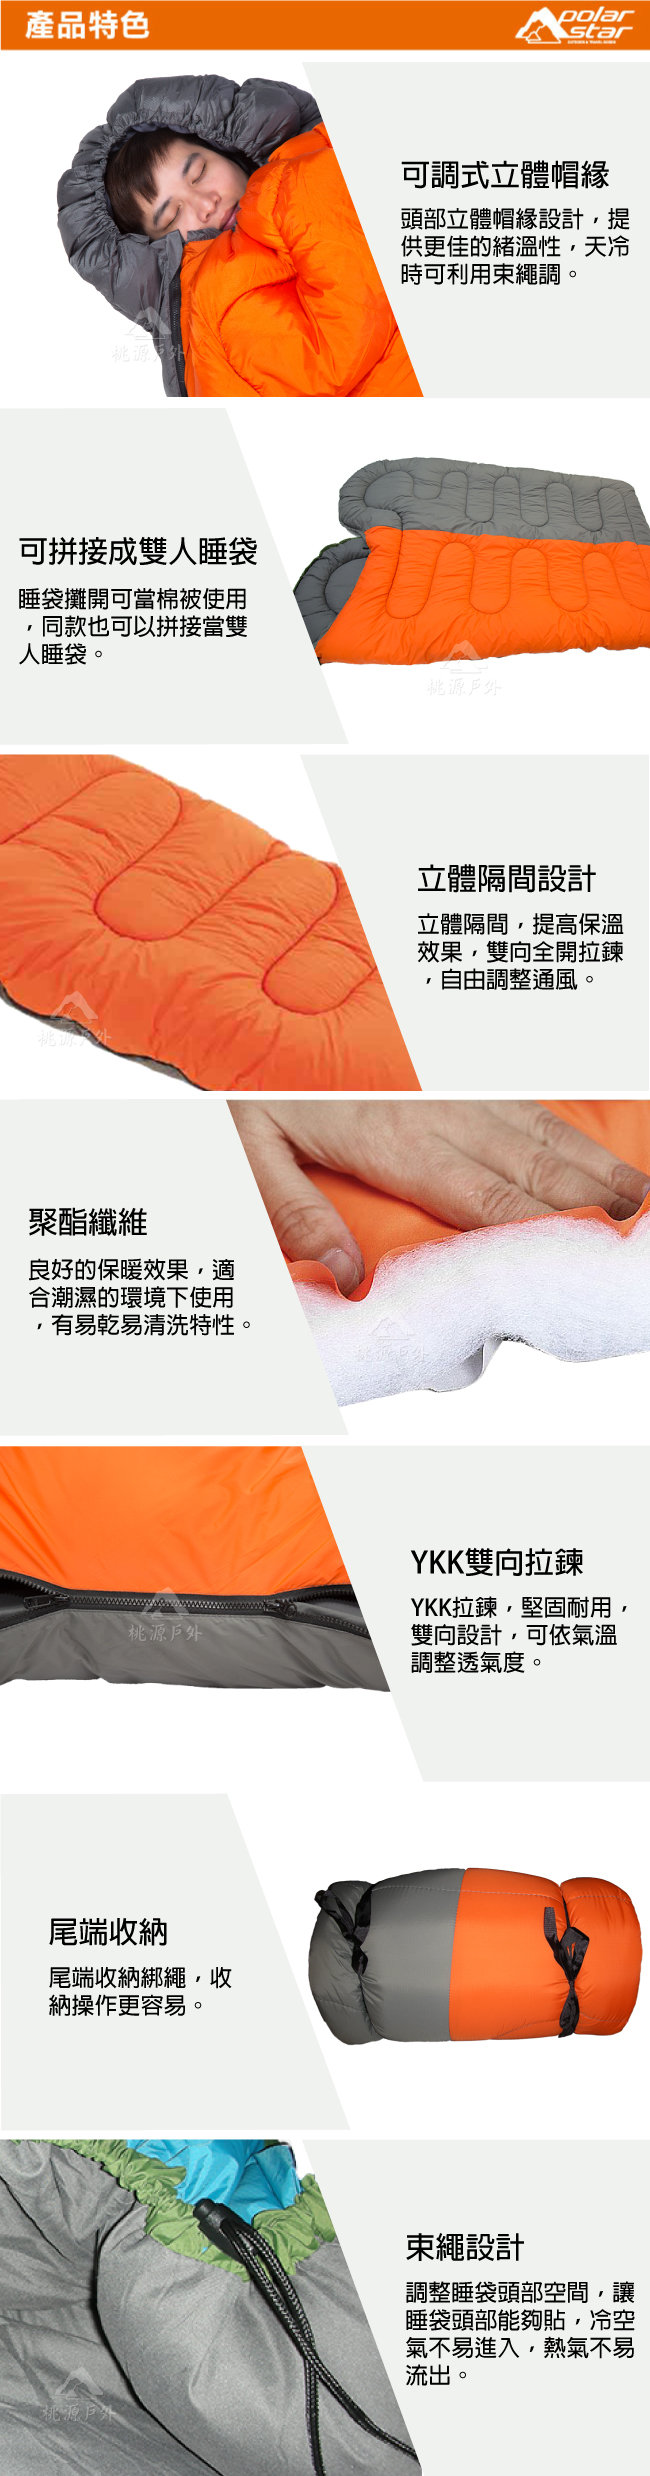 PolarStar 加大型纖維睡袋『橘』P16730 (耐寒度 -12~7°C)